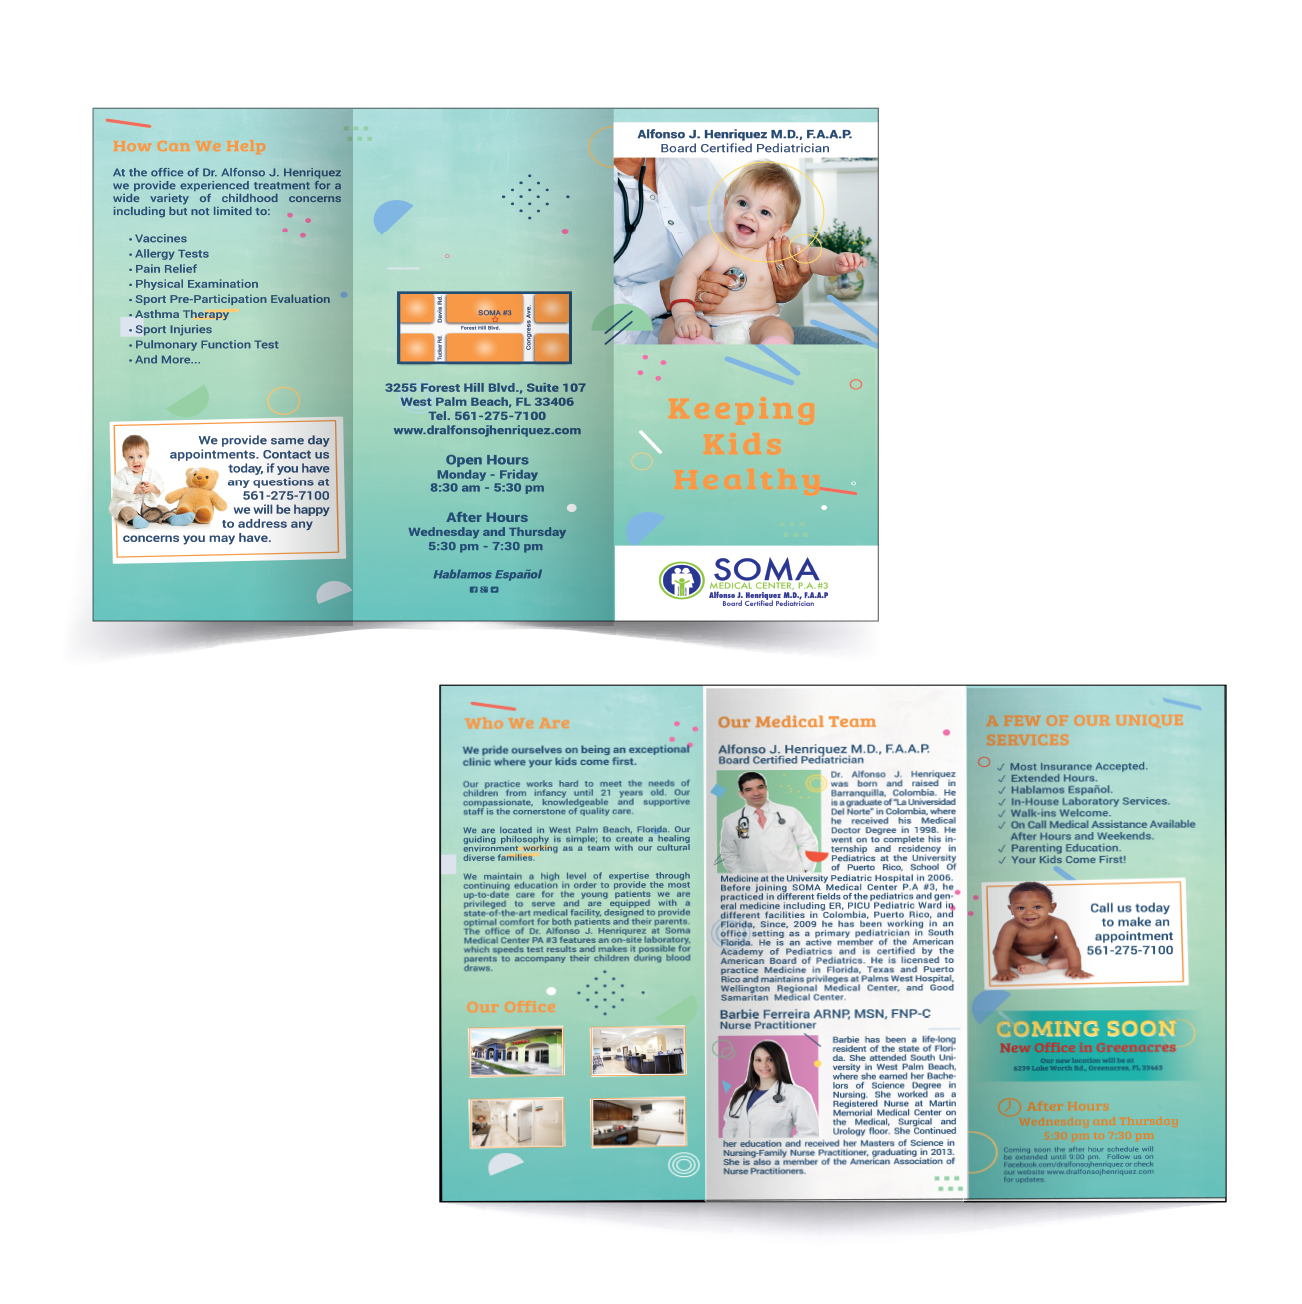 soma medical center clinic brochure